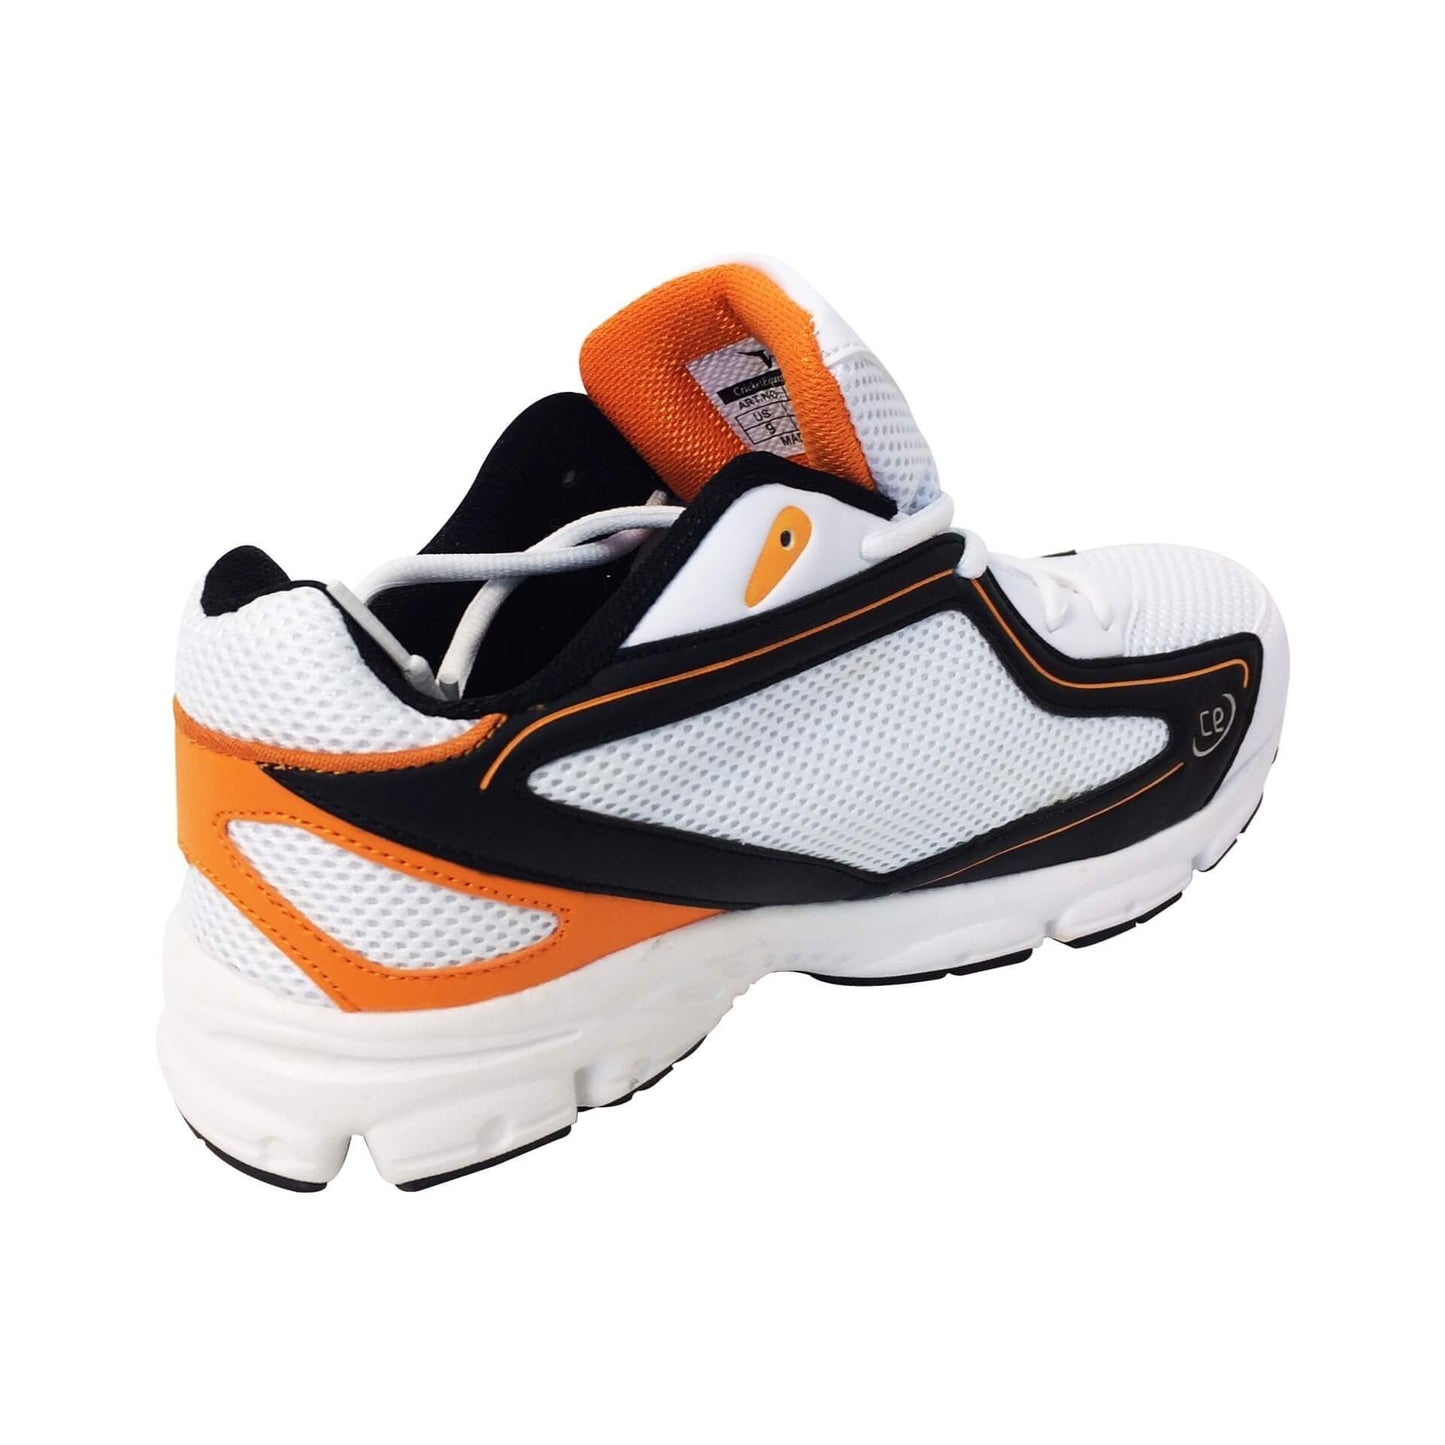 Wingz Quick Silver Rubber Sole Cricket Sports Shoes Color Orange Black White